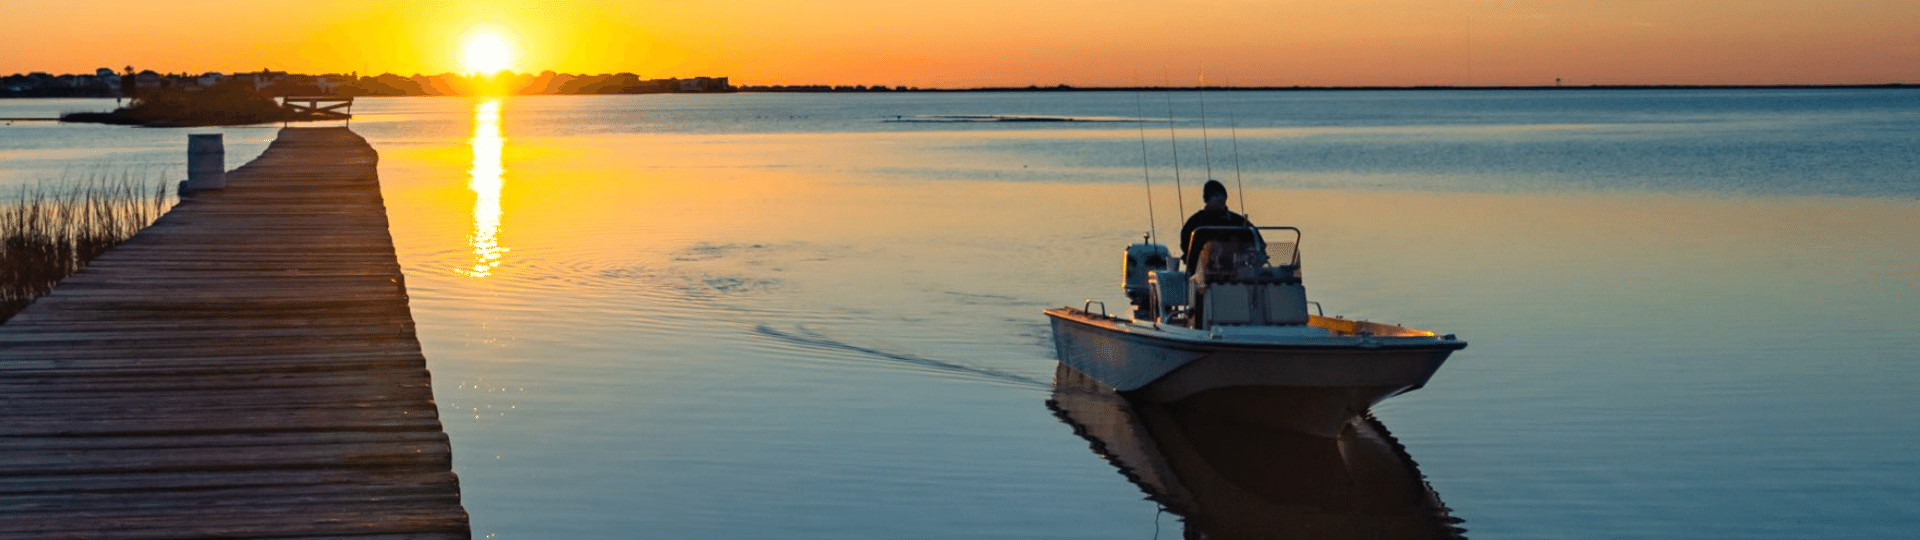 Boat at sunset in Galveston TX